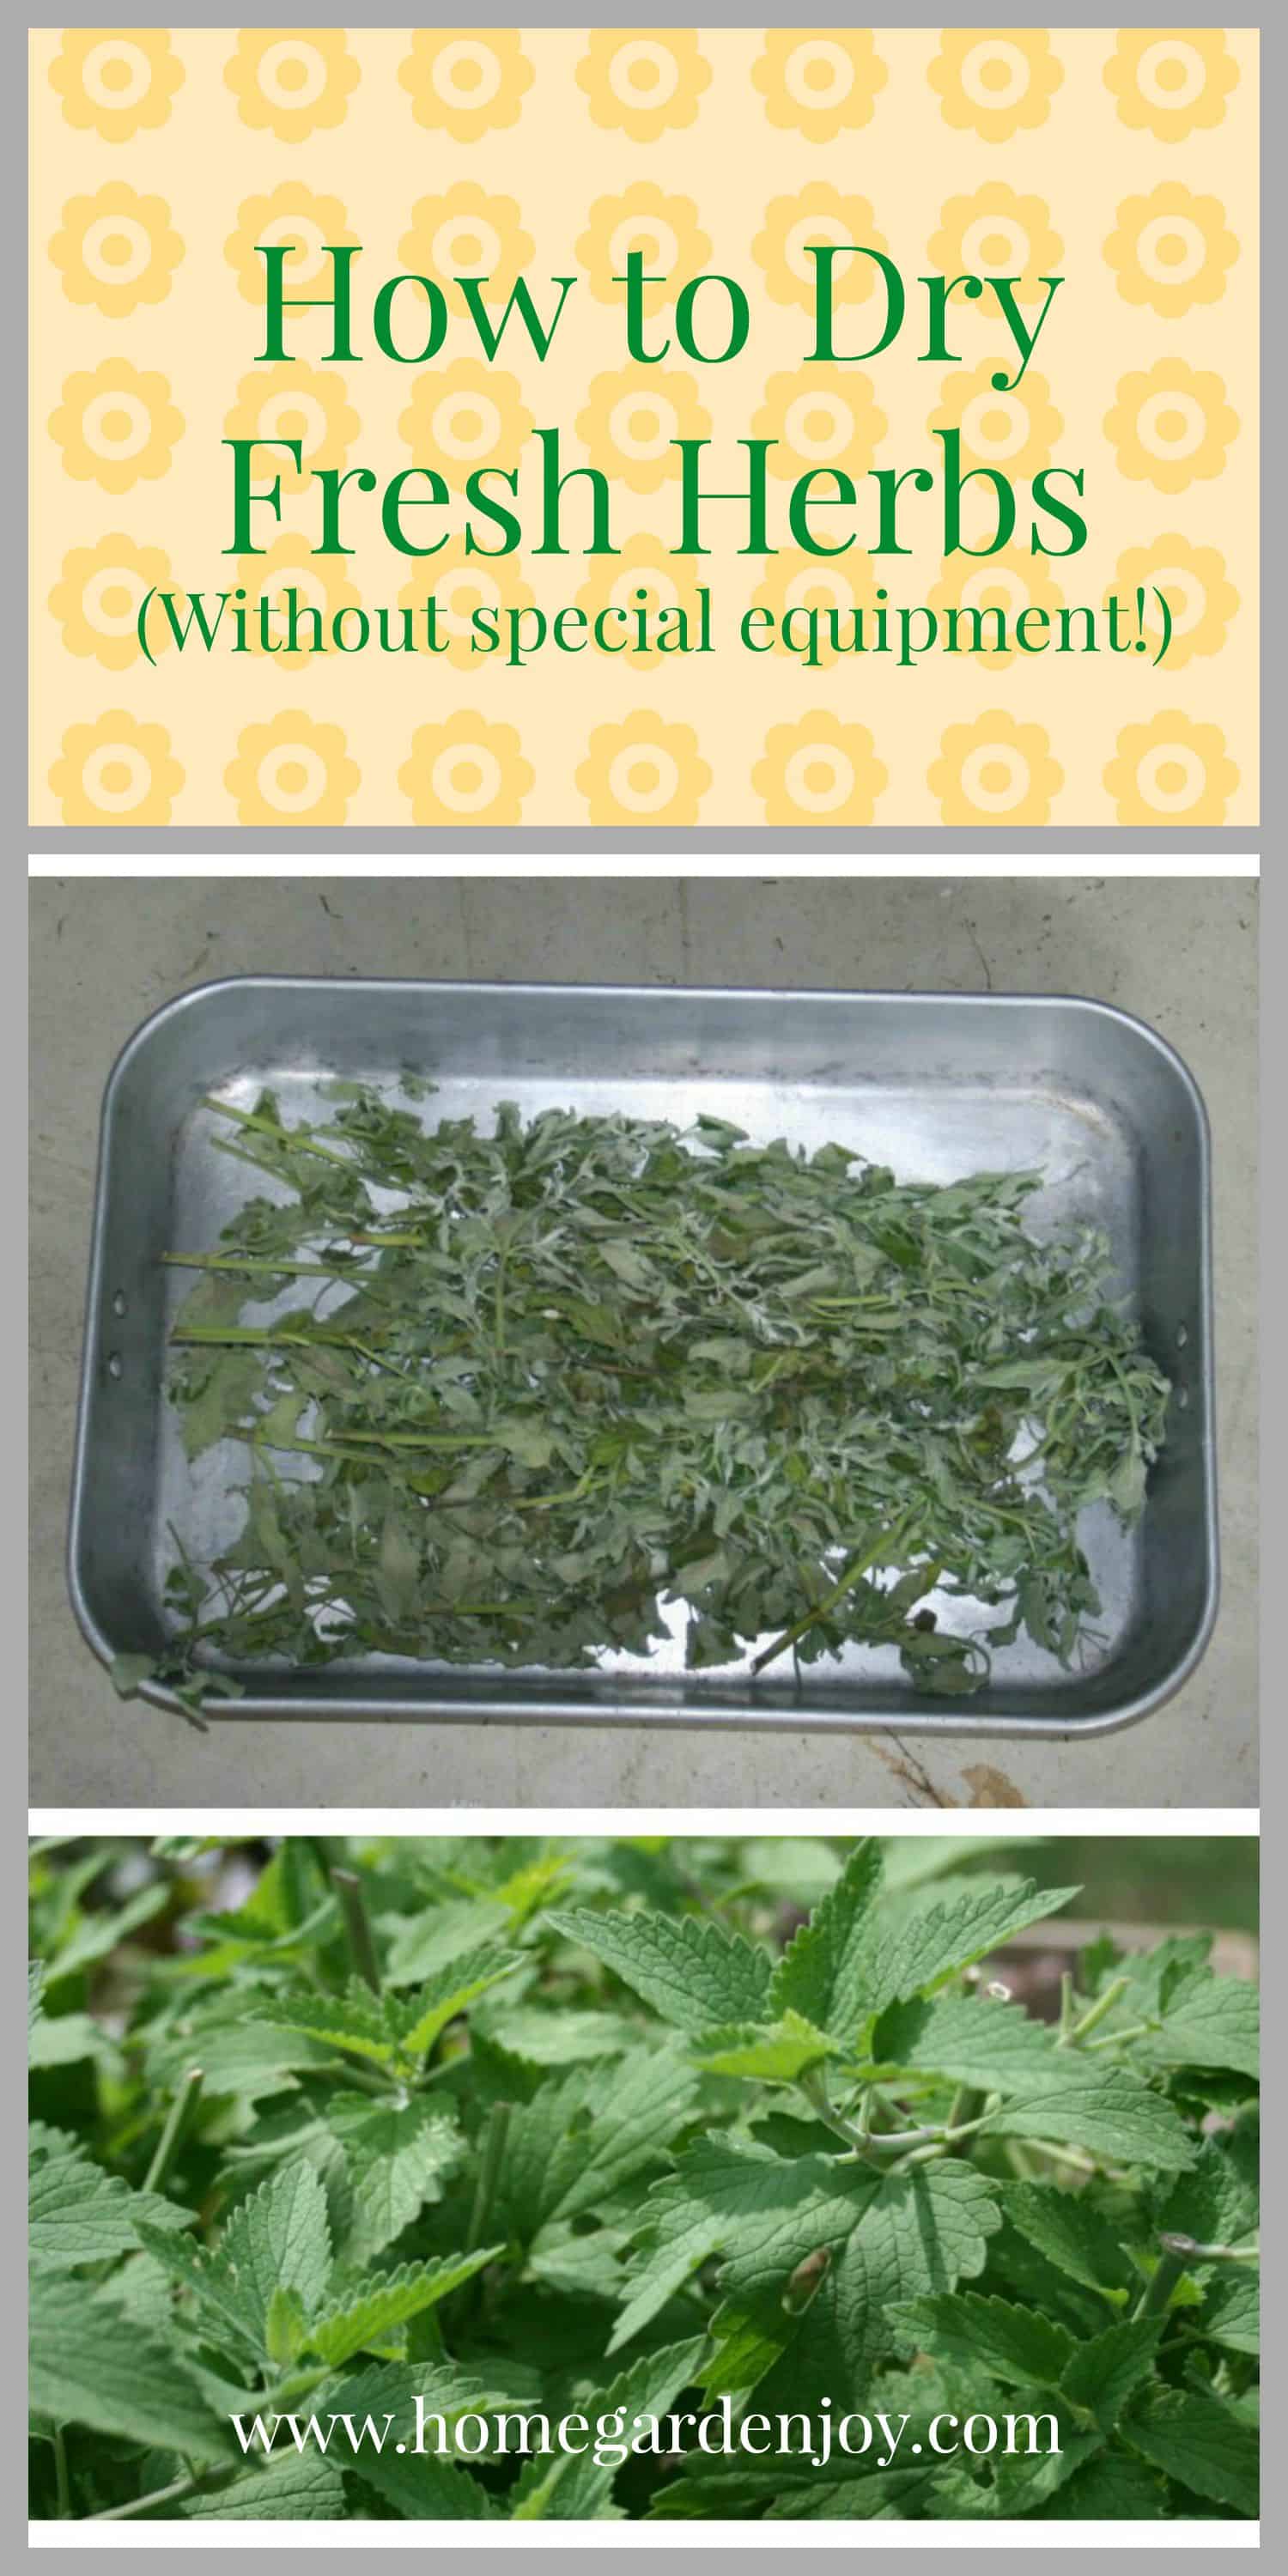 http://homegardenjoy.com/site/wp-content/uploads/2014/06/dry-fresh-herbs.jpg